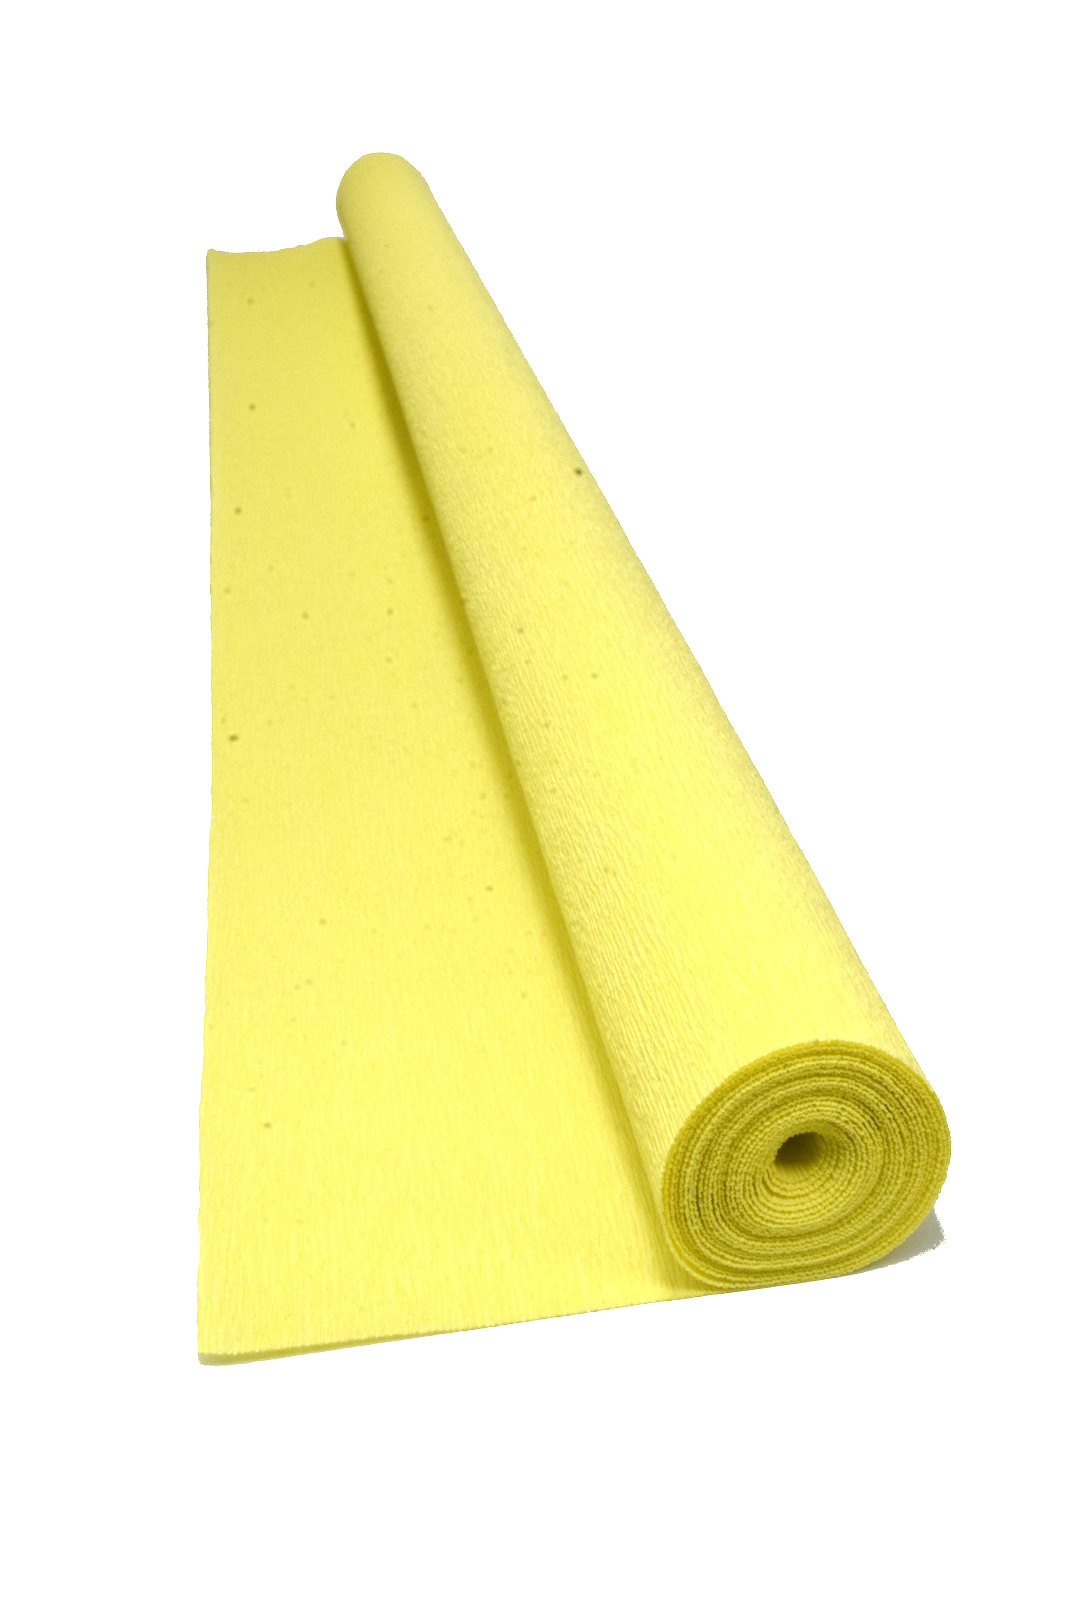 Italian Crepe Paper roll 90 gram - 371 Lemon Yellow